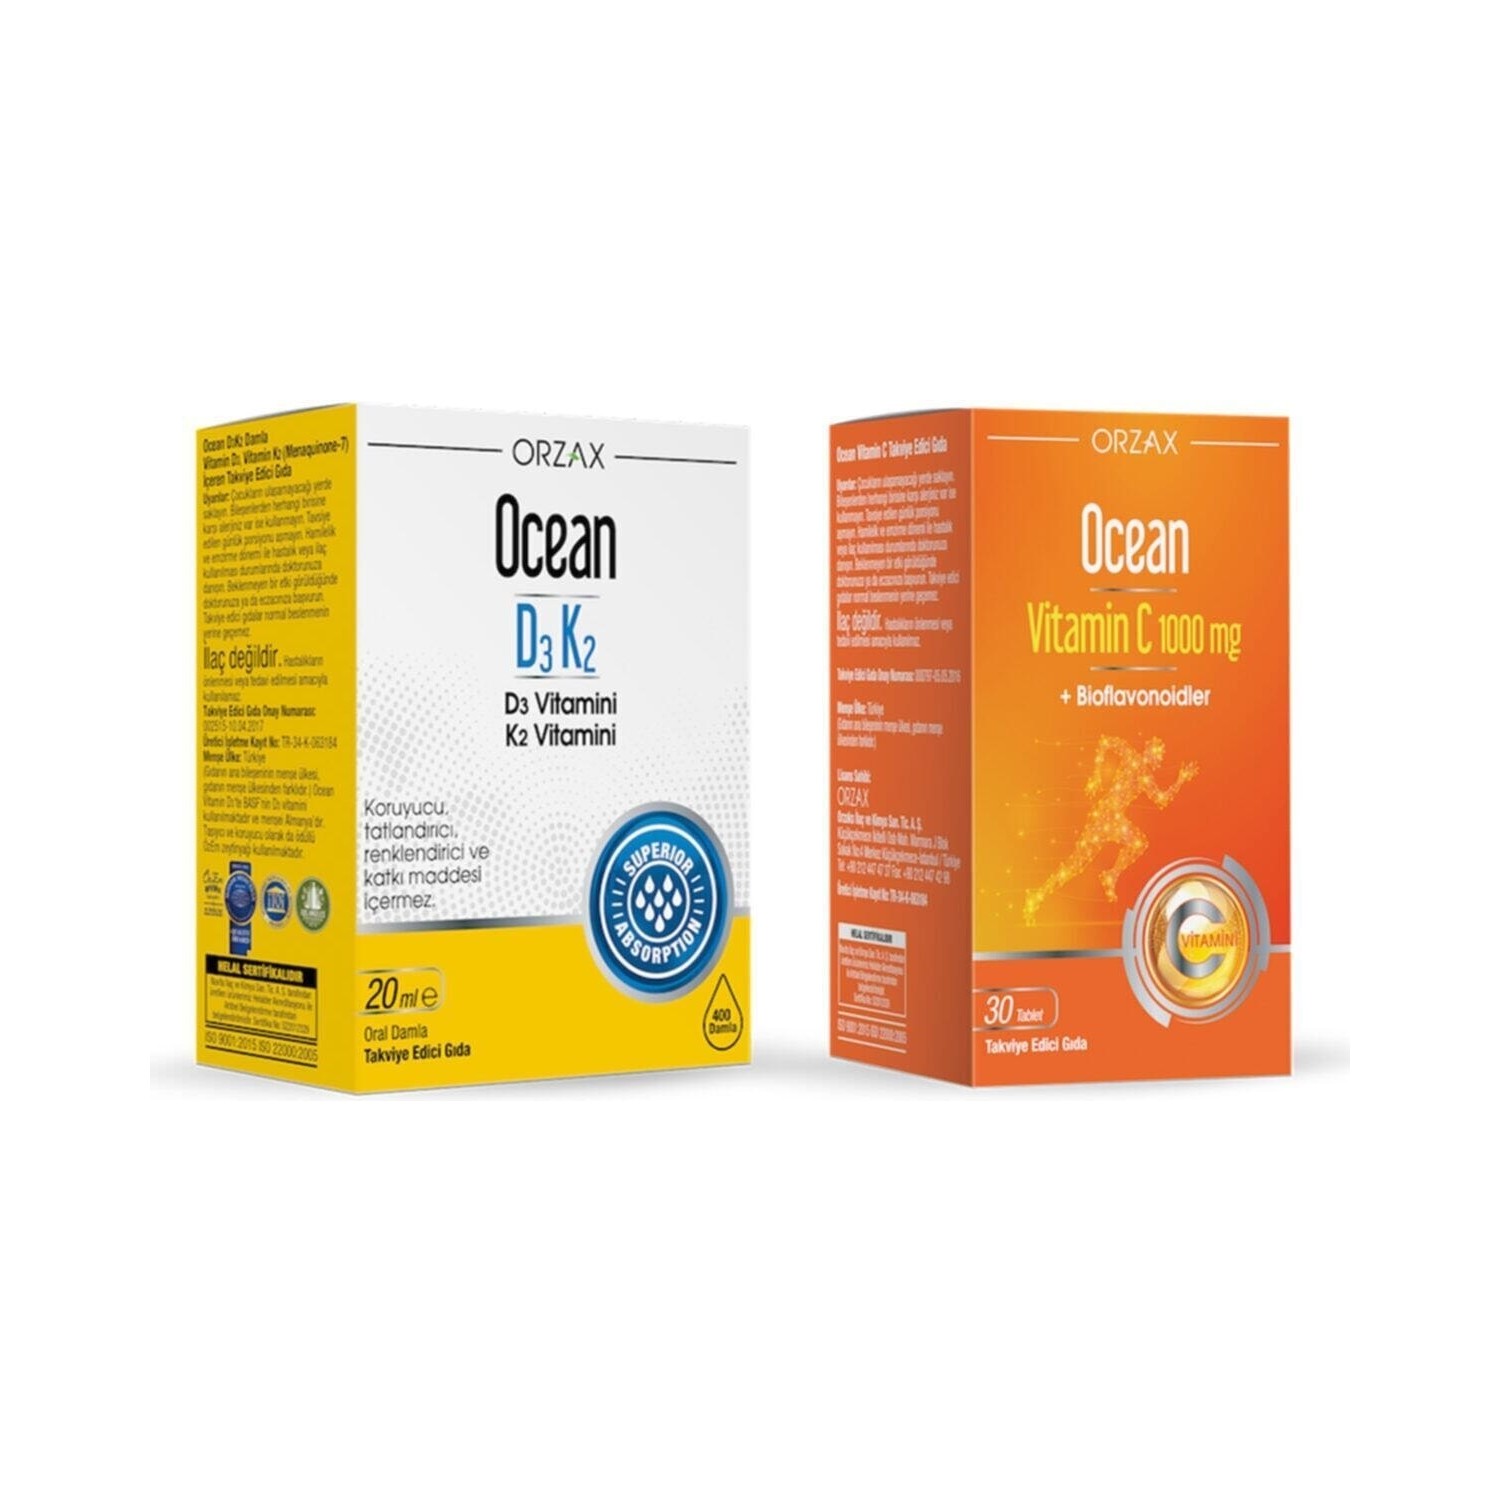 Пищевая добавка Ocean D3 / K2, 20 мл + Витамин C Ocean 1000 мг, 30 таблеток витаминные капли orzax ocean d3 k2 20 мл витамин c ocean 1000 мг 30 таблеток